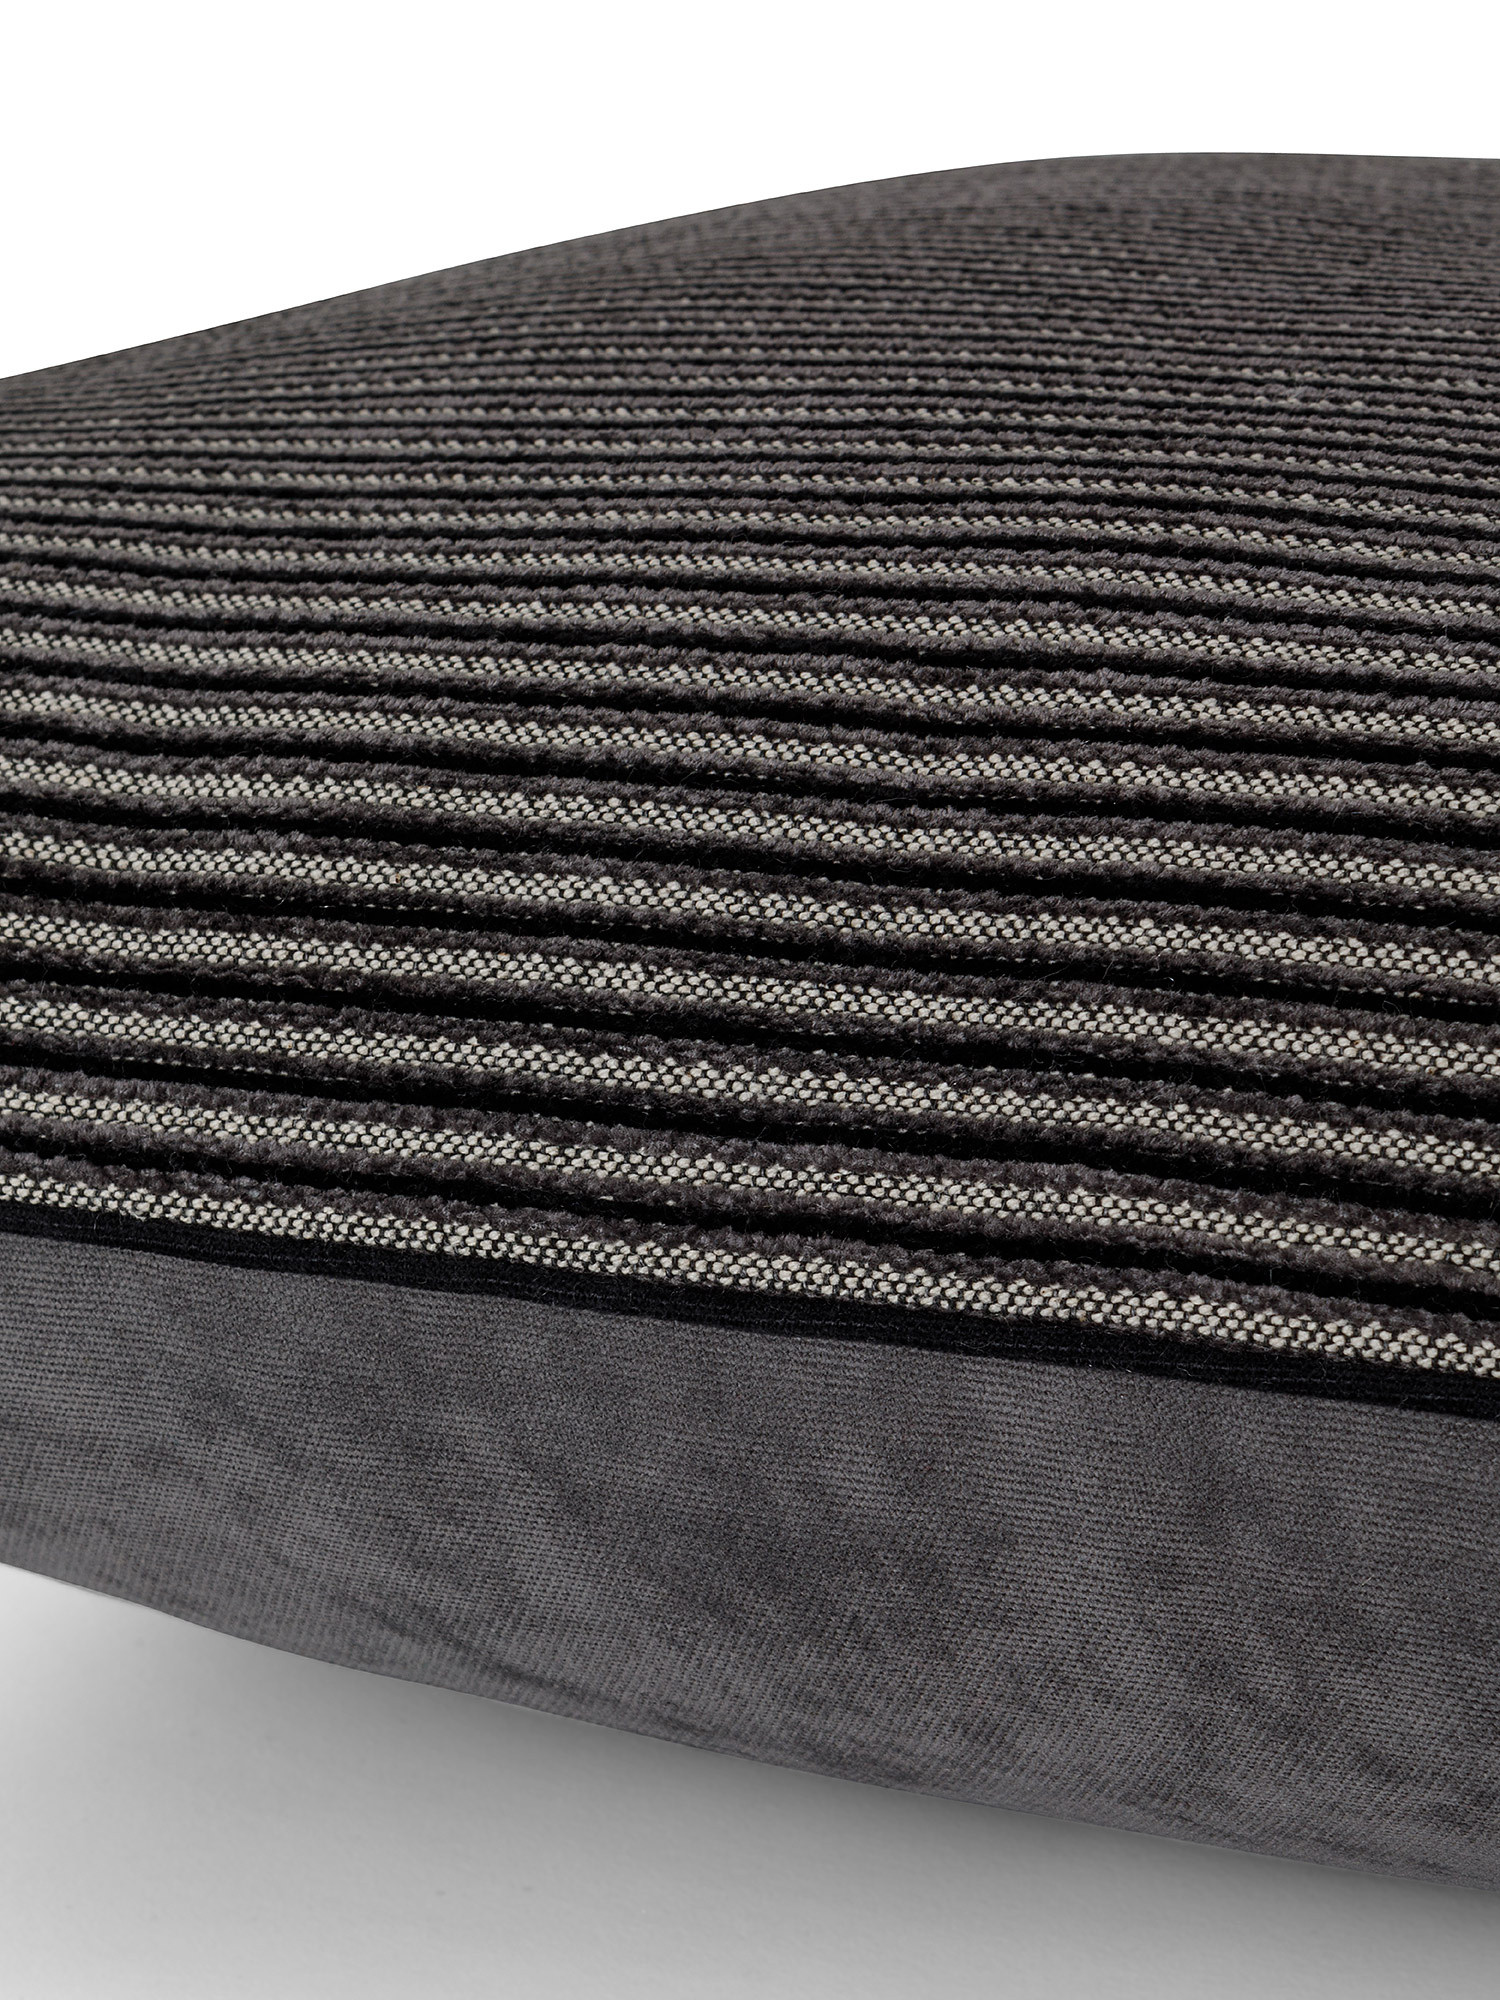 Jacquard cushion with striped motif 45x45cm, Black, large image number 2